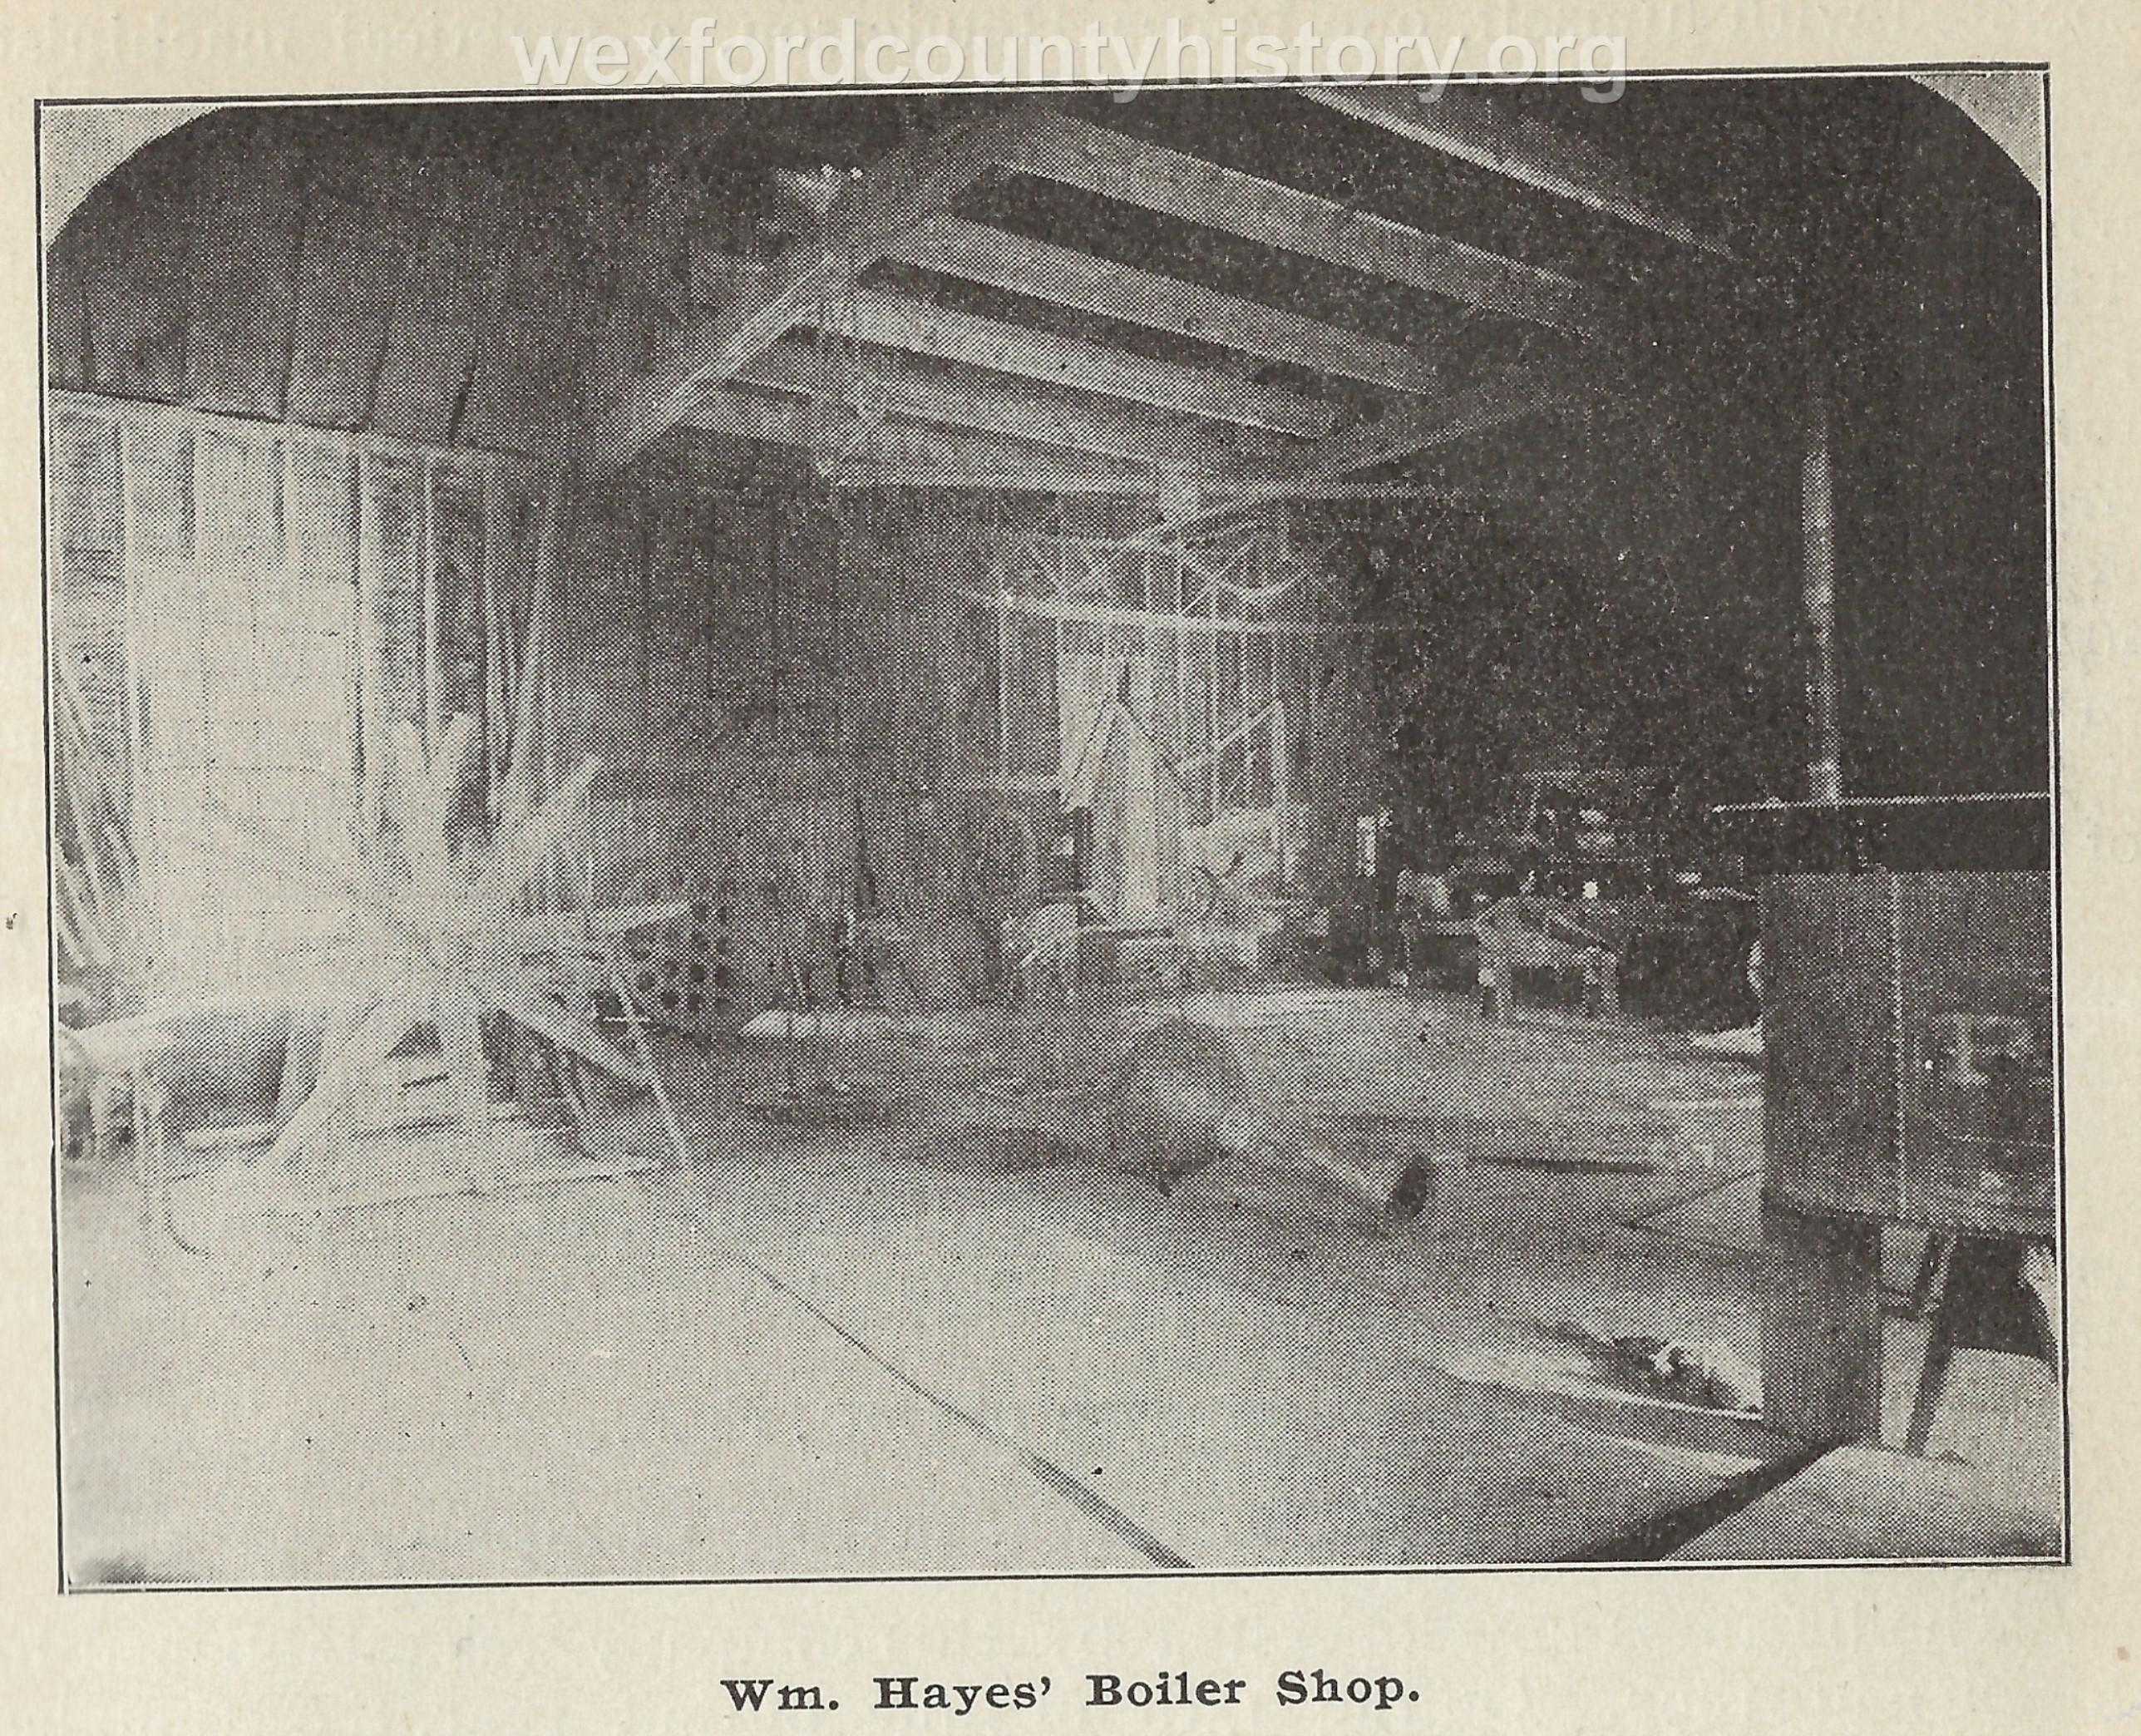 William Hayes' Boiler Shop